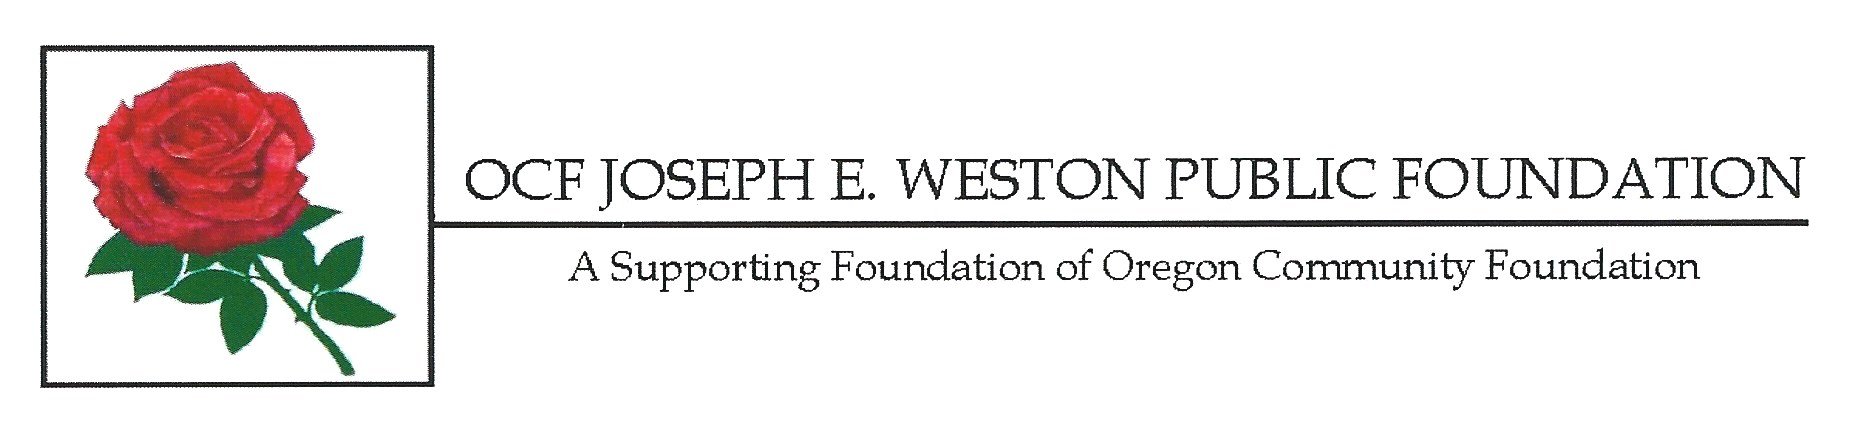 OCF Joseph E. Weston Public Foundation.jpeg